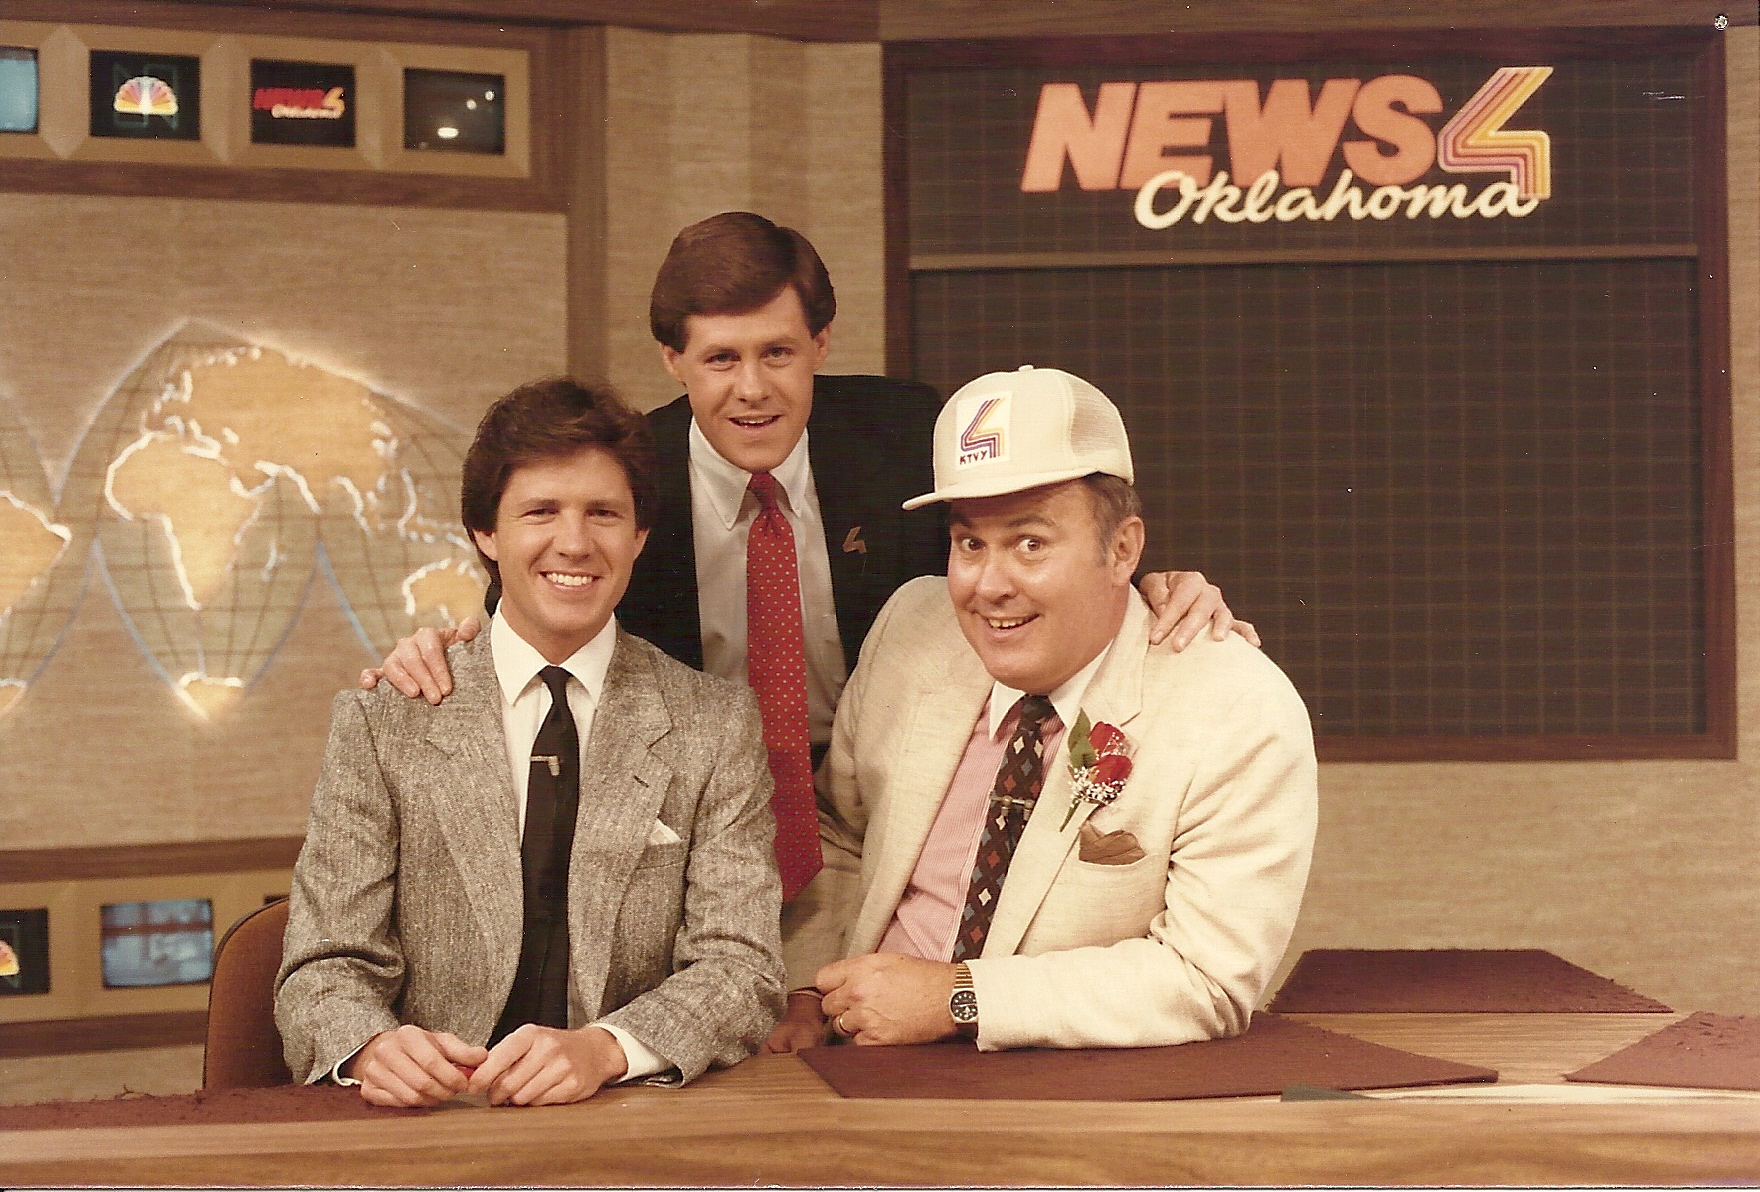 Ben McCain, Butch McCain and the legendary Willard Scott of NBC's Today Show.